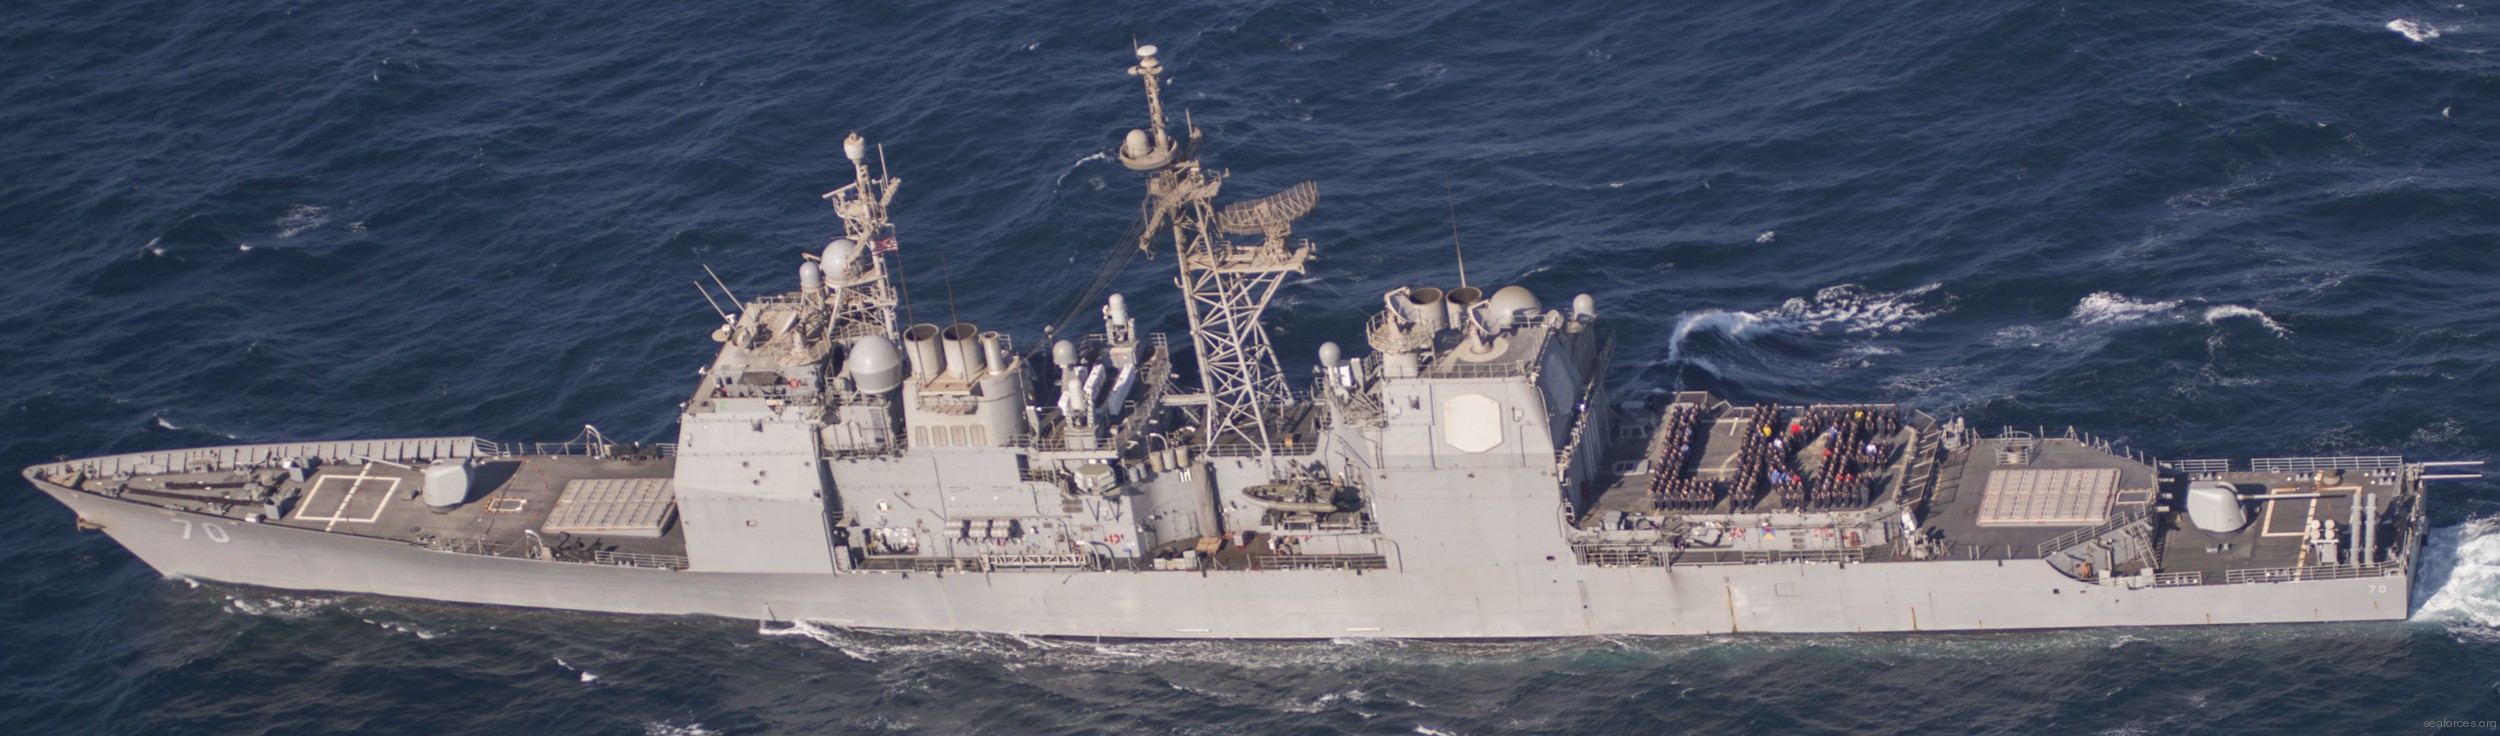 cg-70 uss lake erie ticonderoga class guided missile cruiser navy 94 arabian gulf